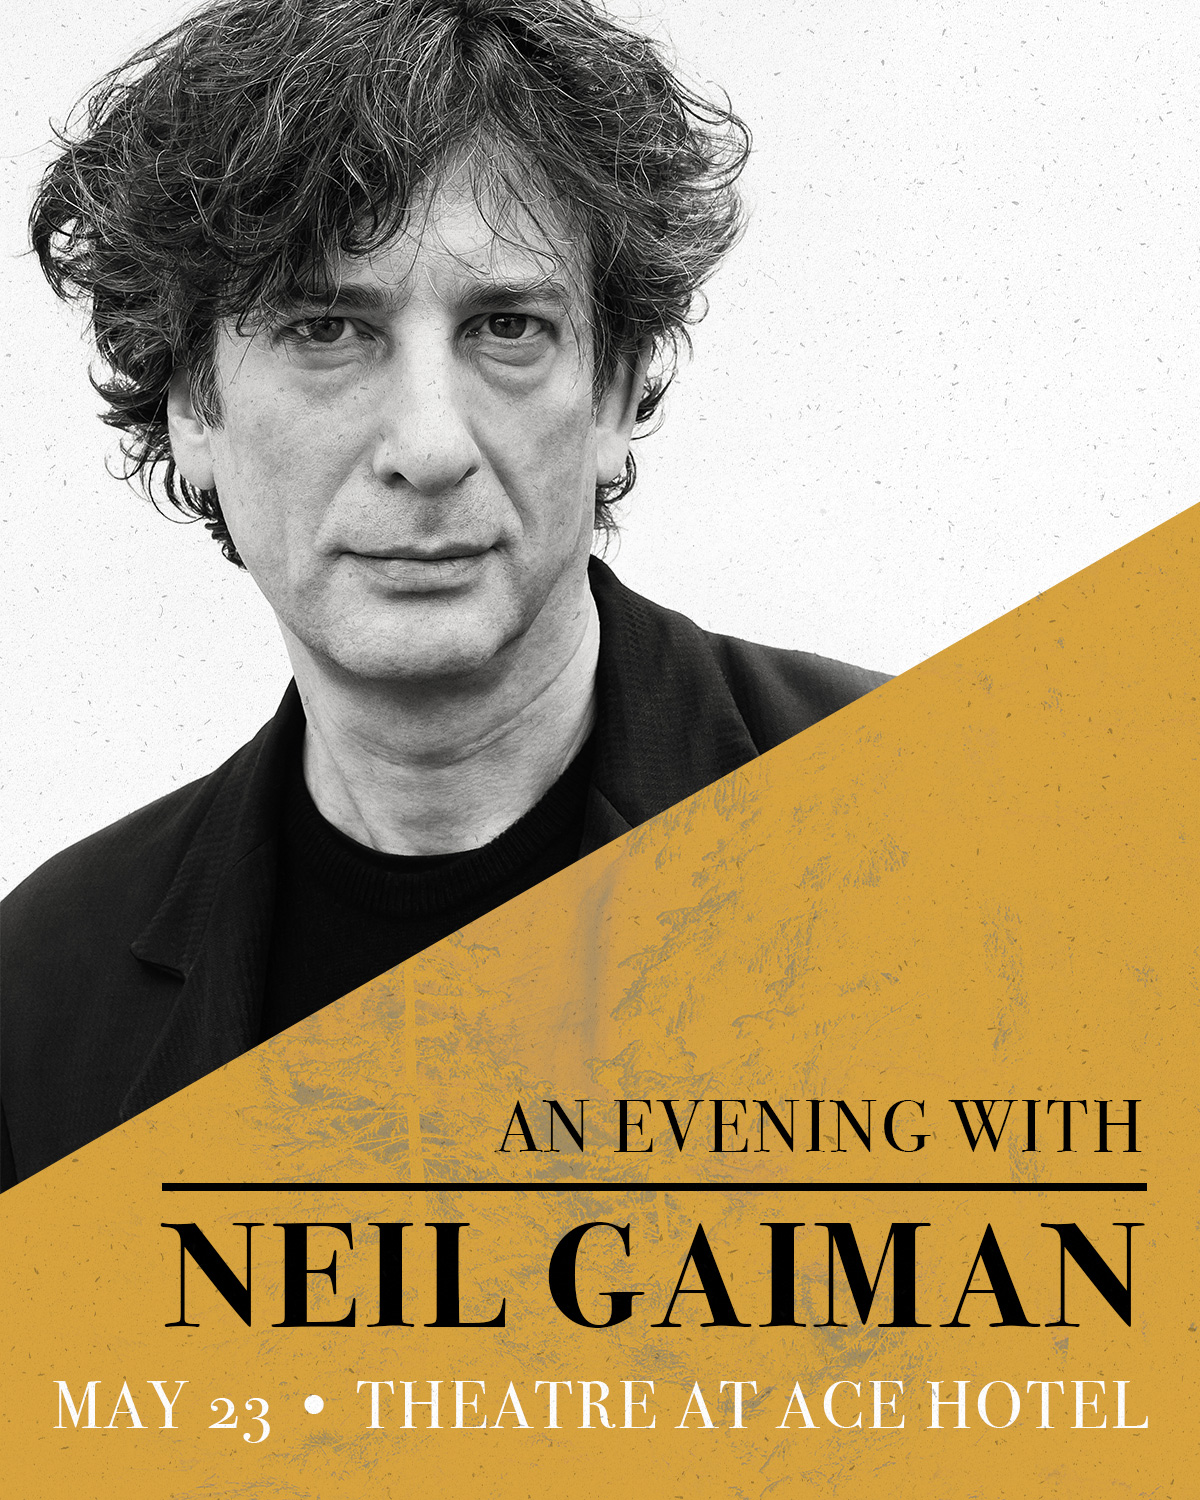 Neil Gaiman event promo